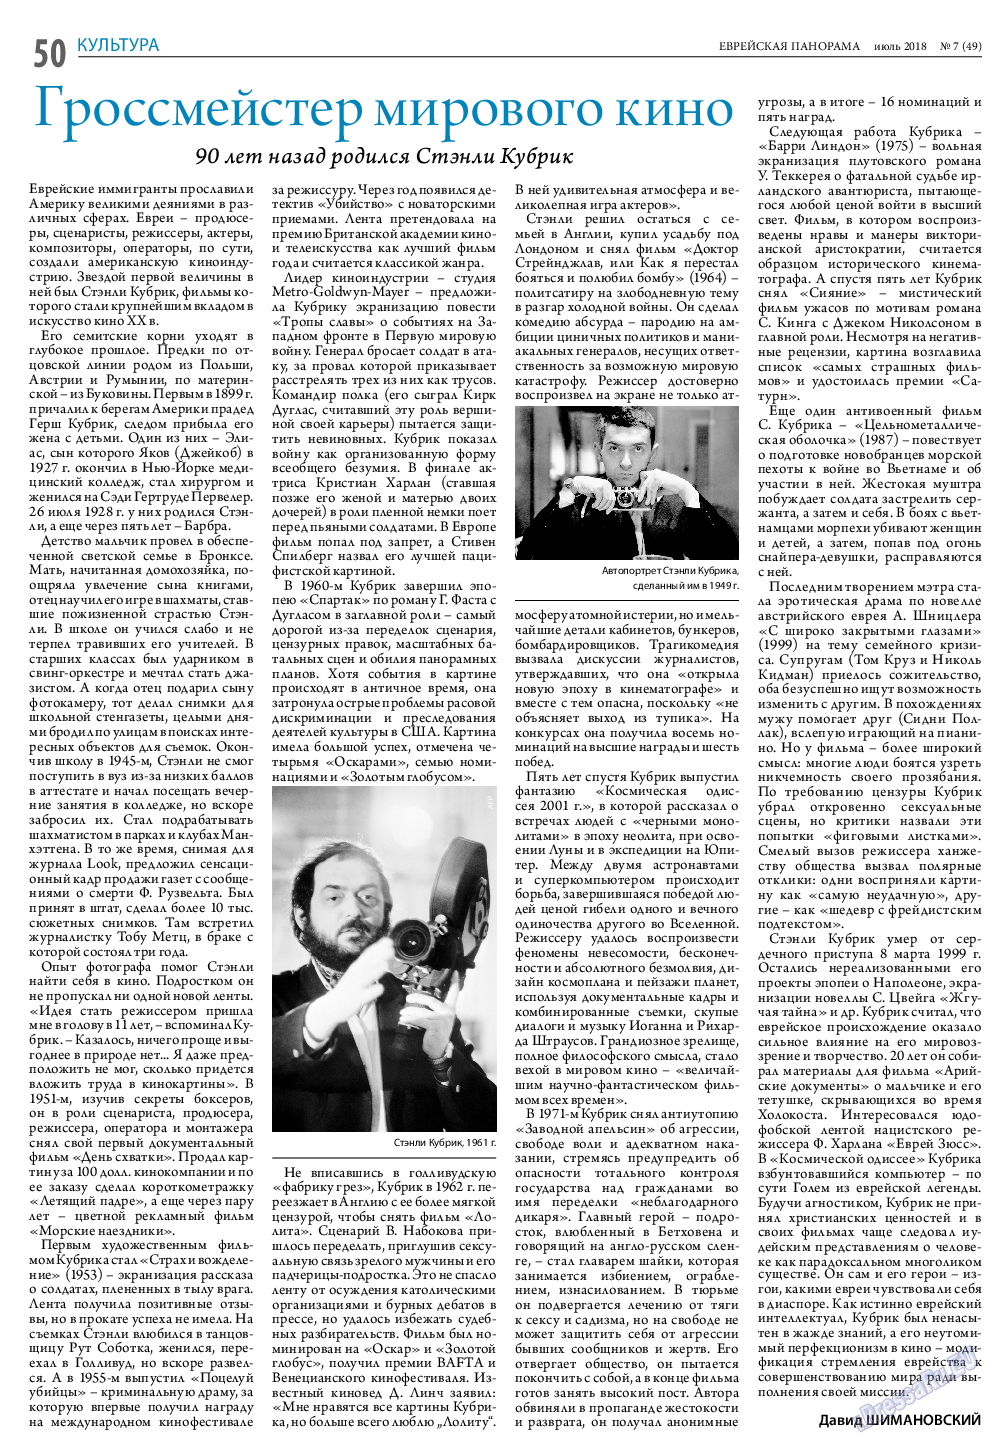 Еврейская панорама, газета. 2018 №7 стр.50